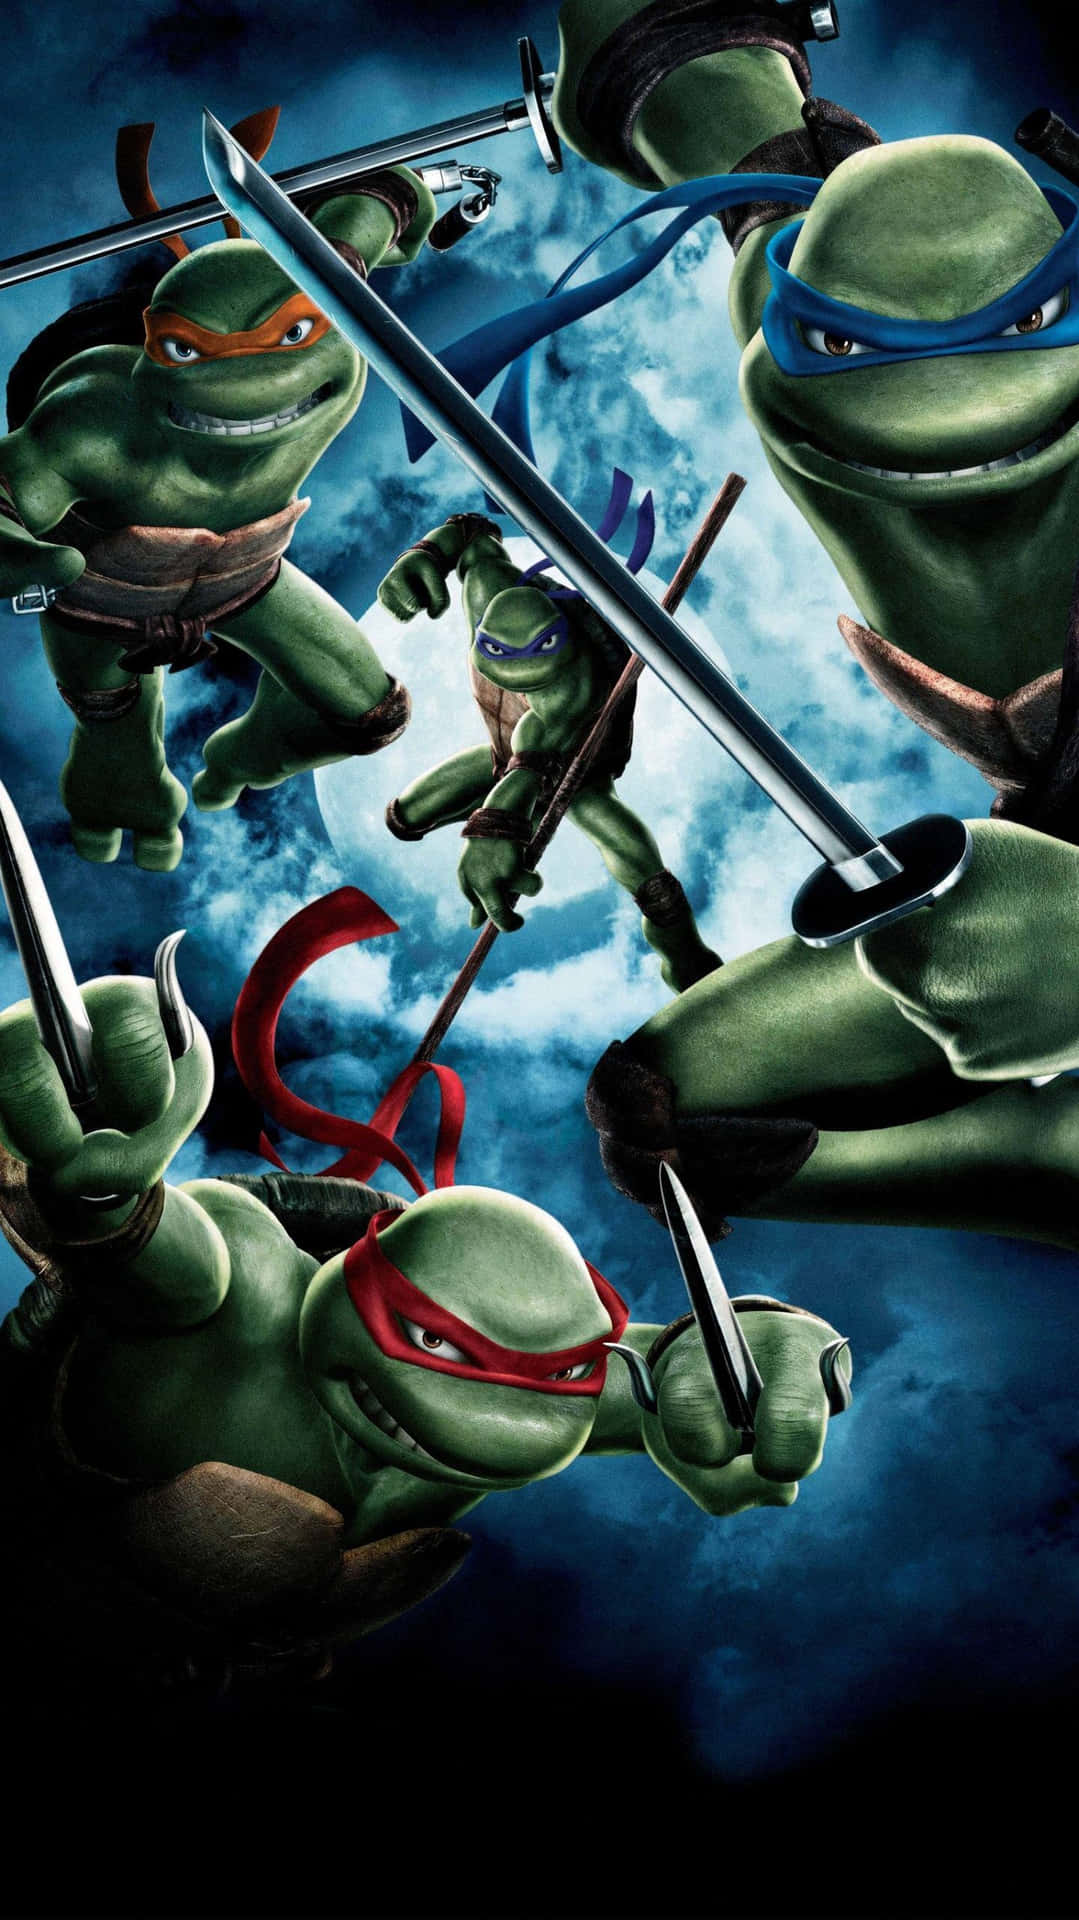 Iconic Heroes and Villains of Teenage Mutant Ninja Turtles Comics! Wallpaper